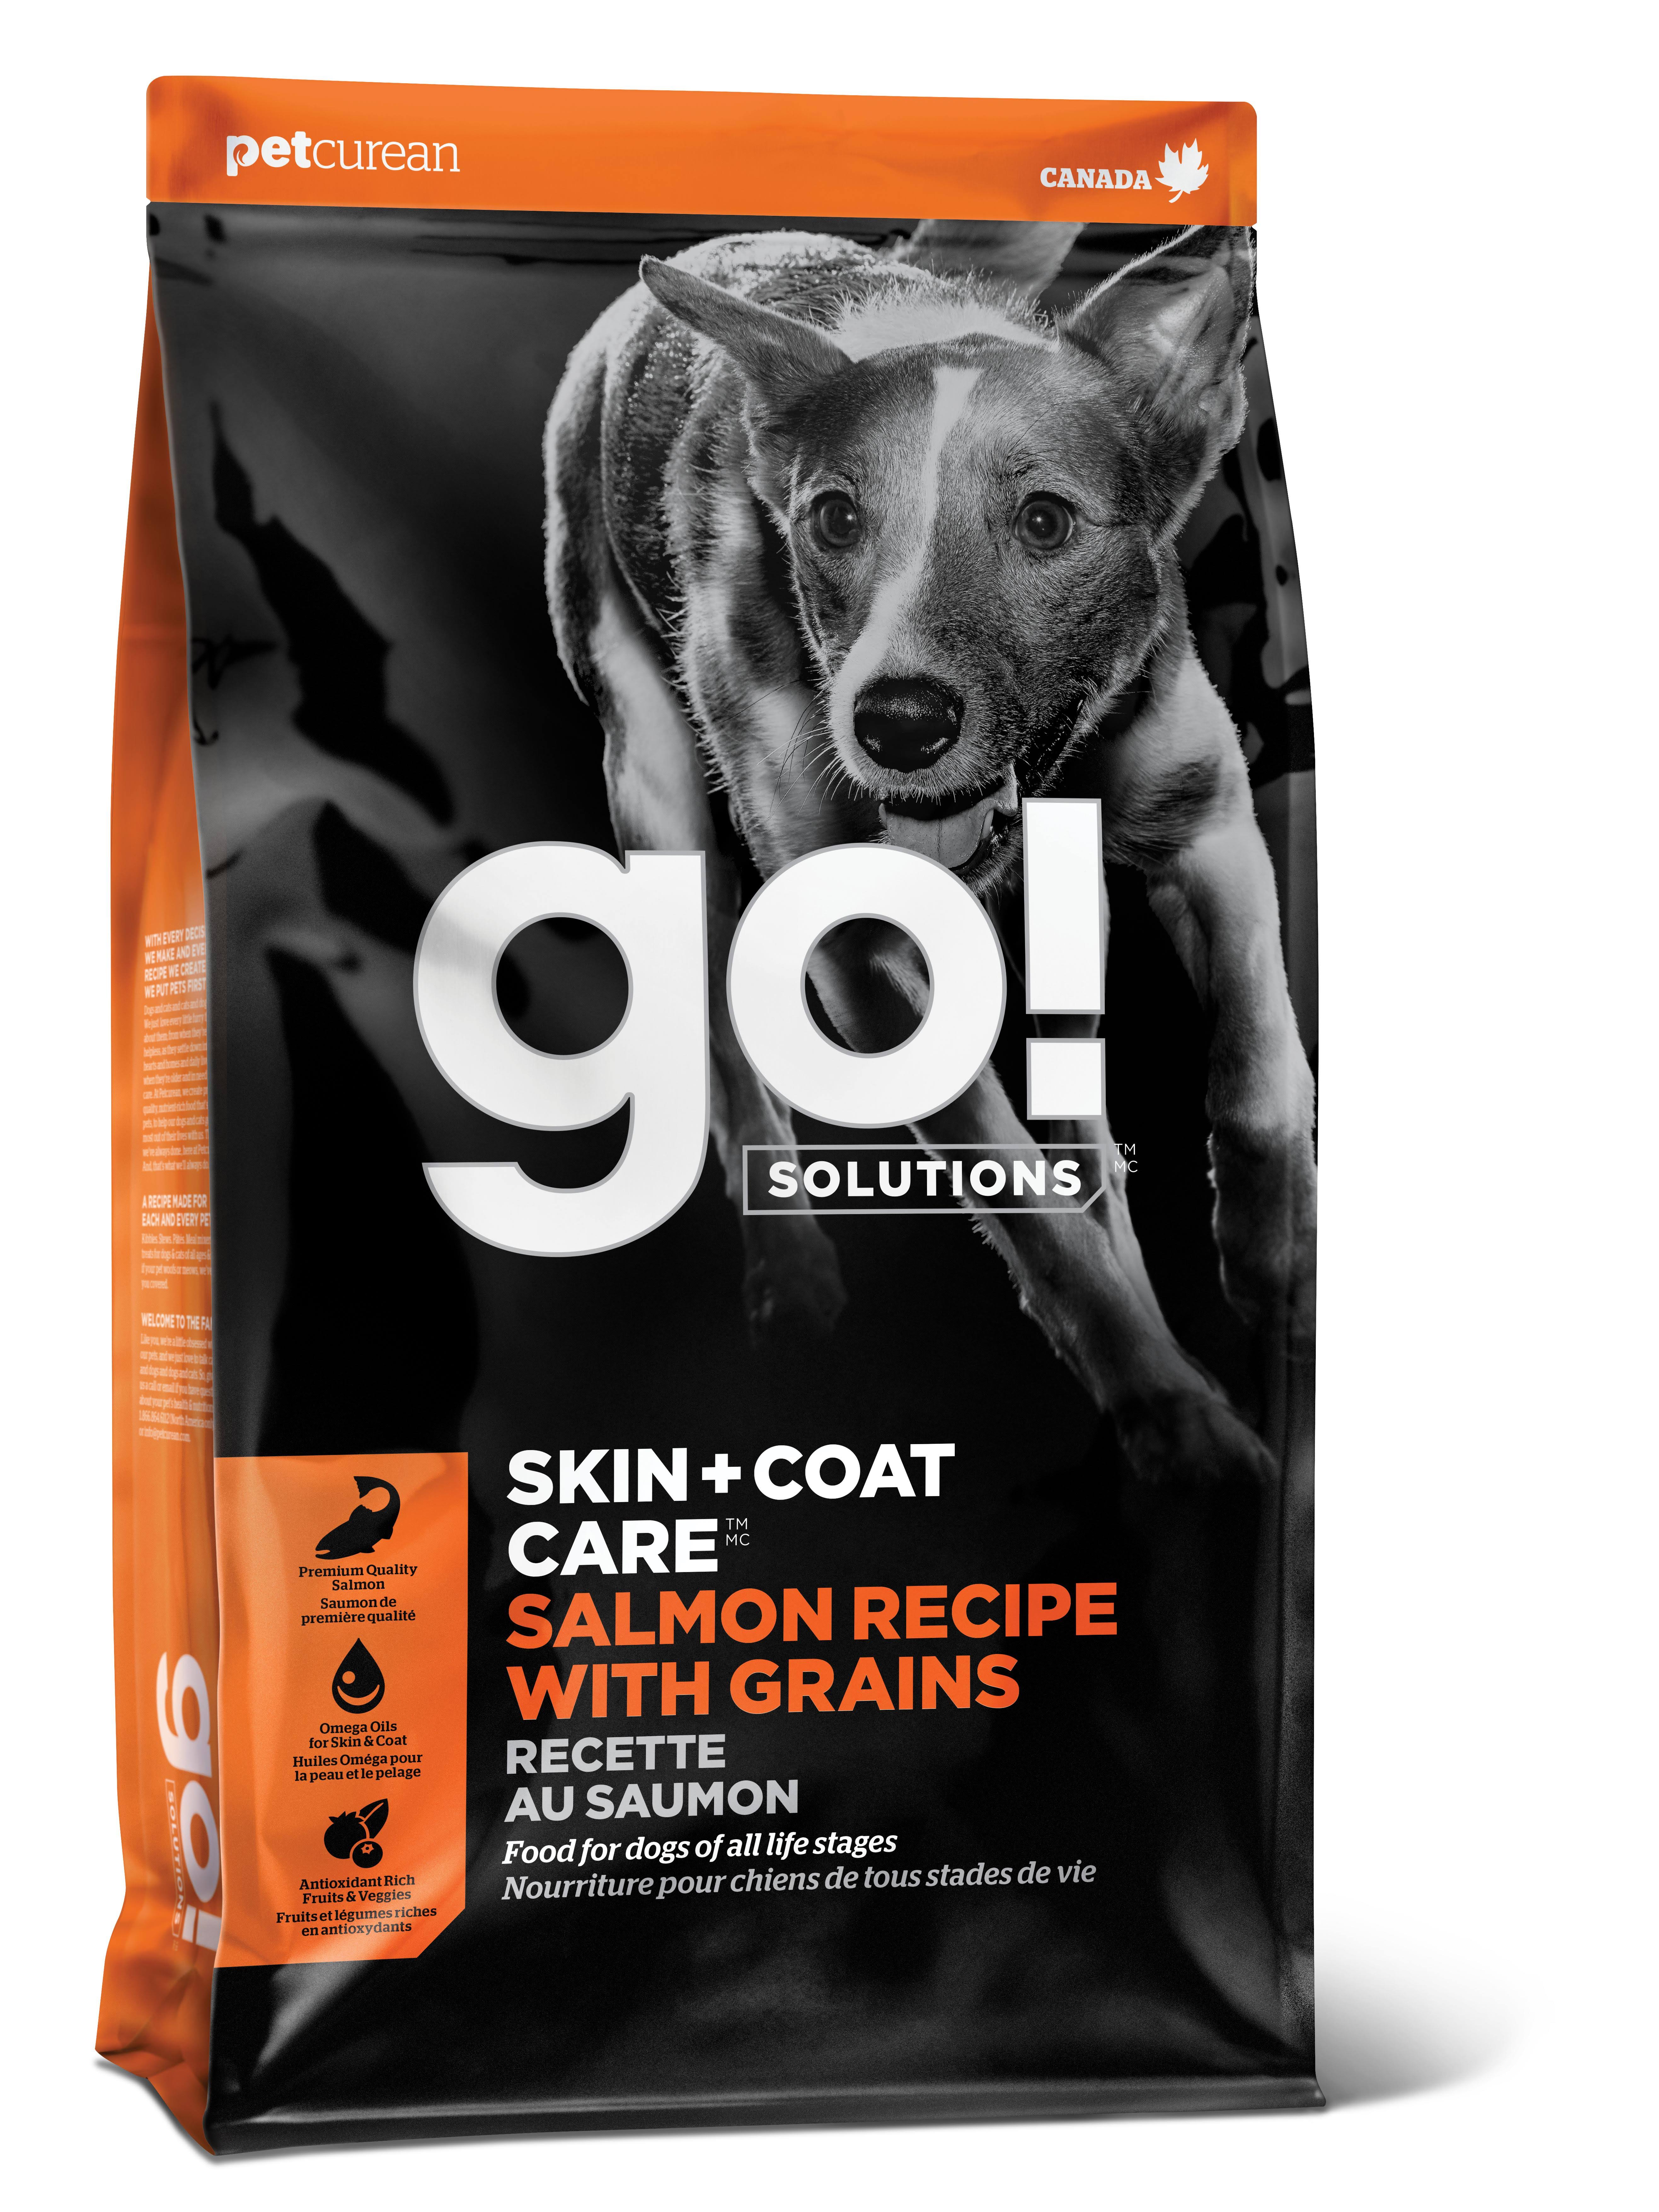 Go! Skin + Coat - Salmon Dog Food, 25 LB